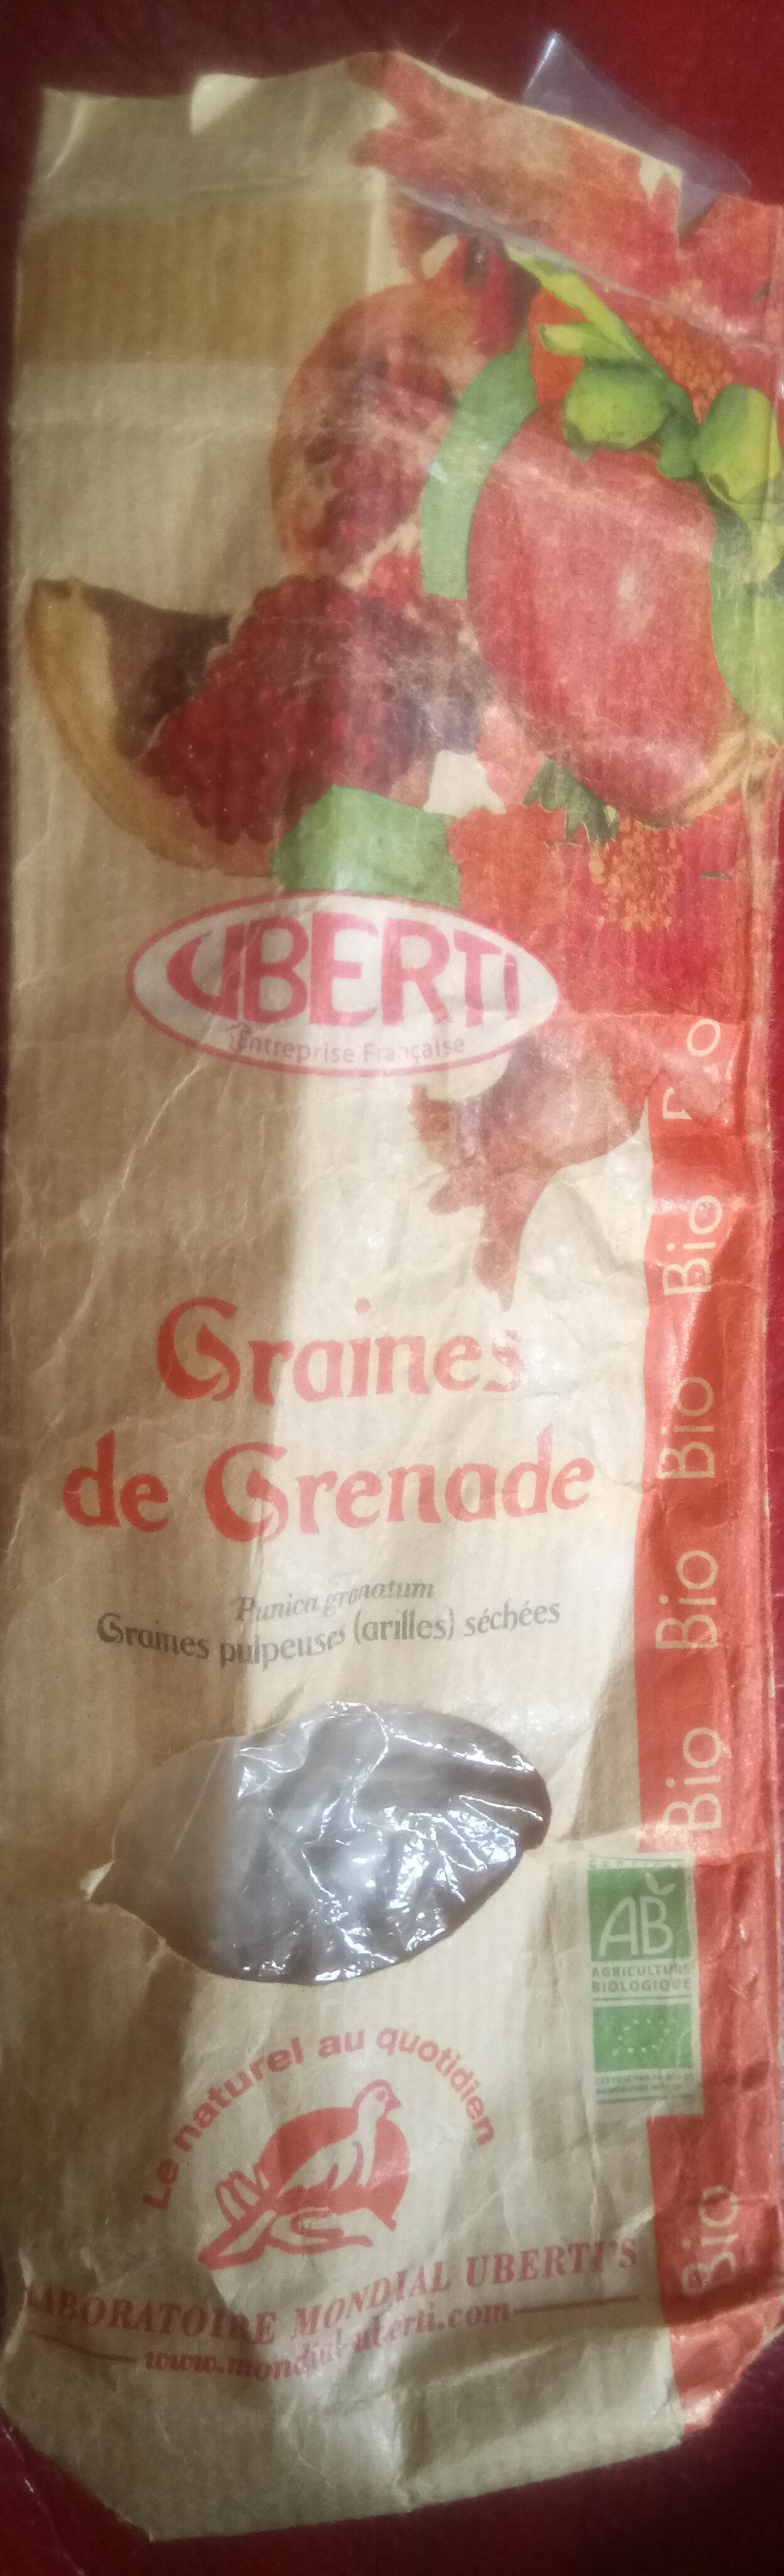 Graines de Grenade - Product - fr